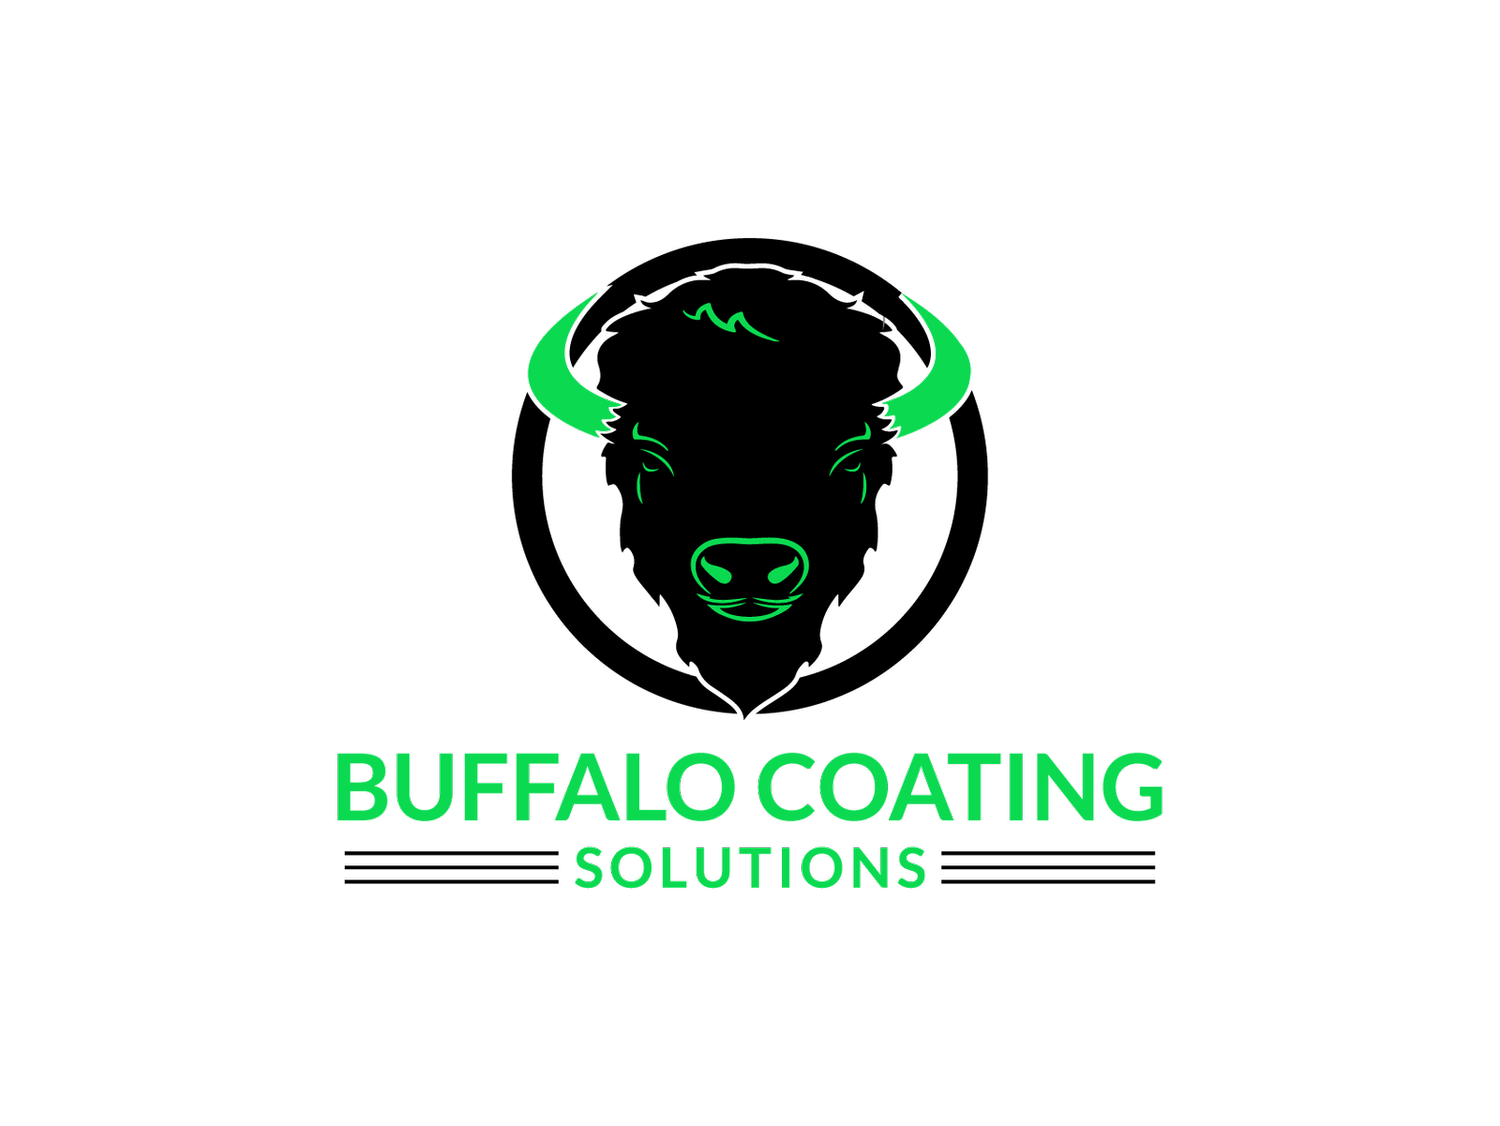 Buffalo Coating Solutions